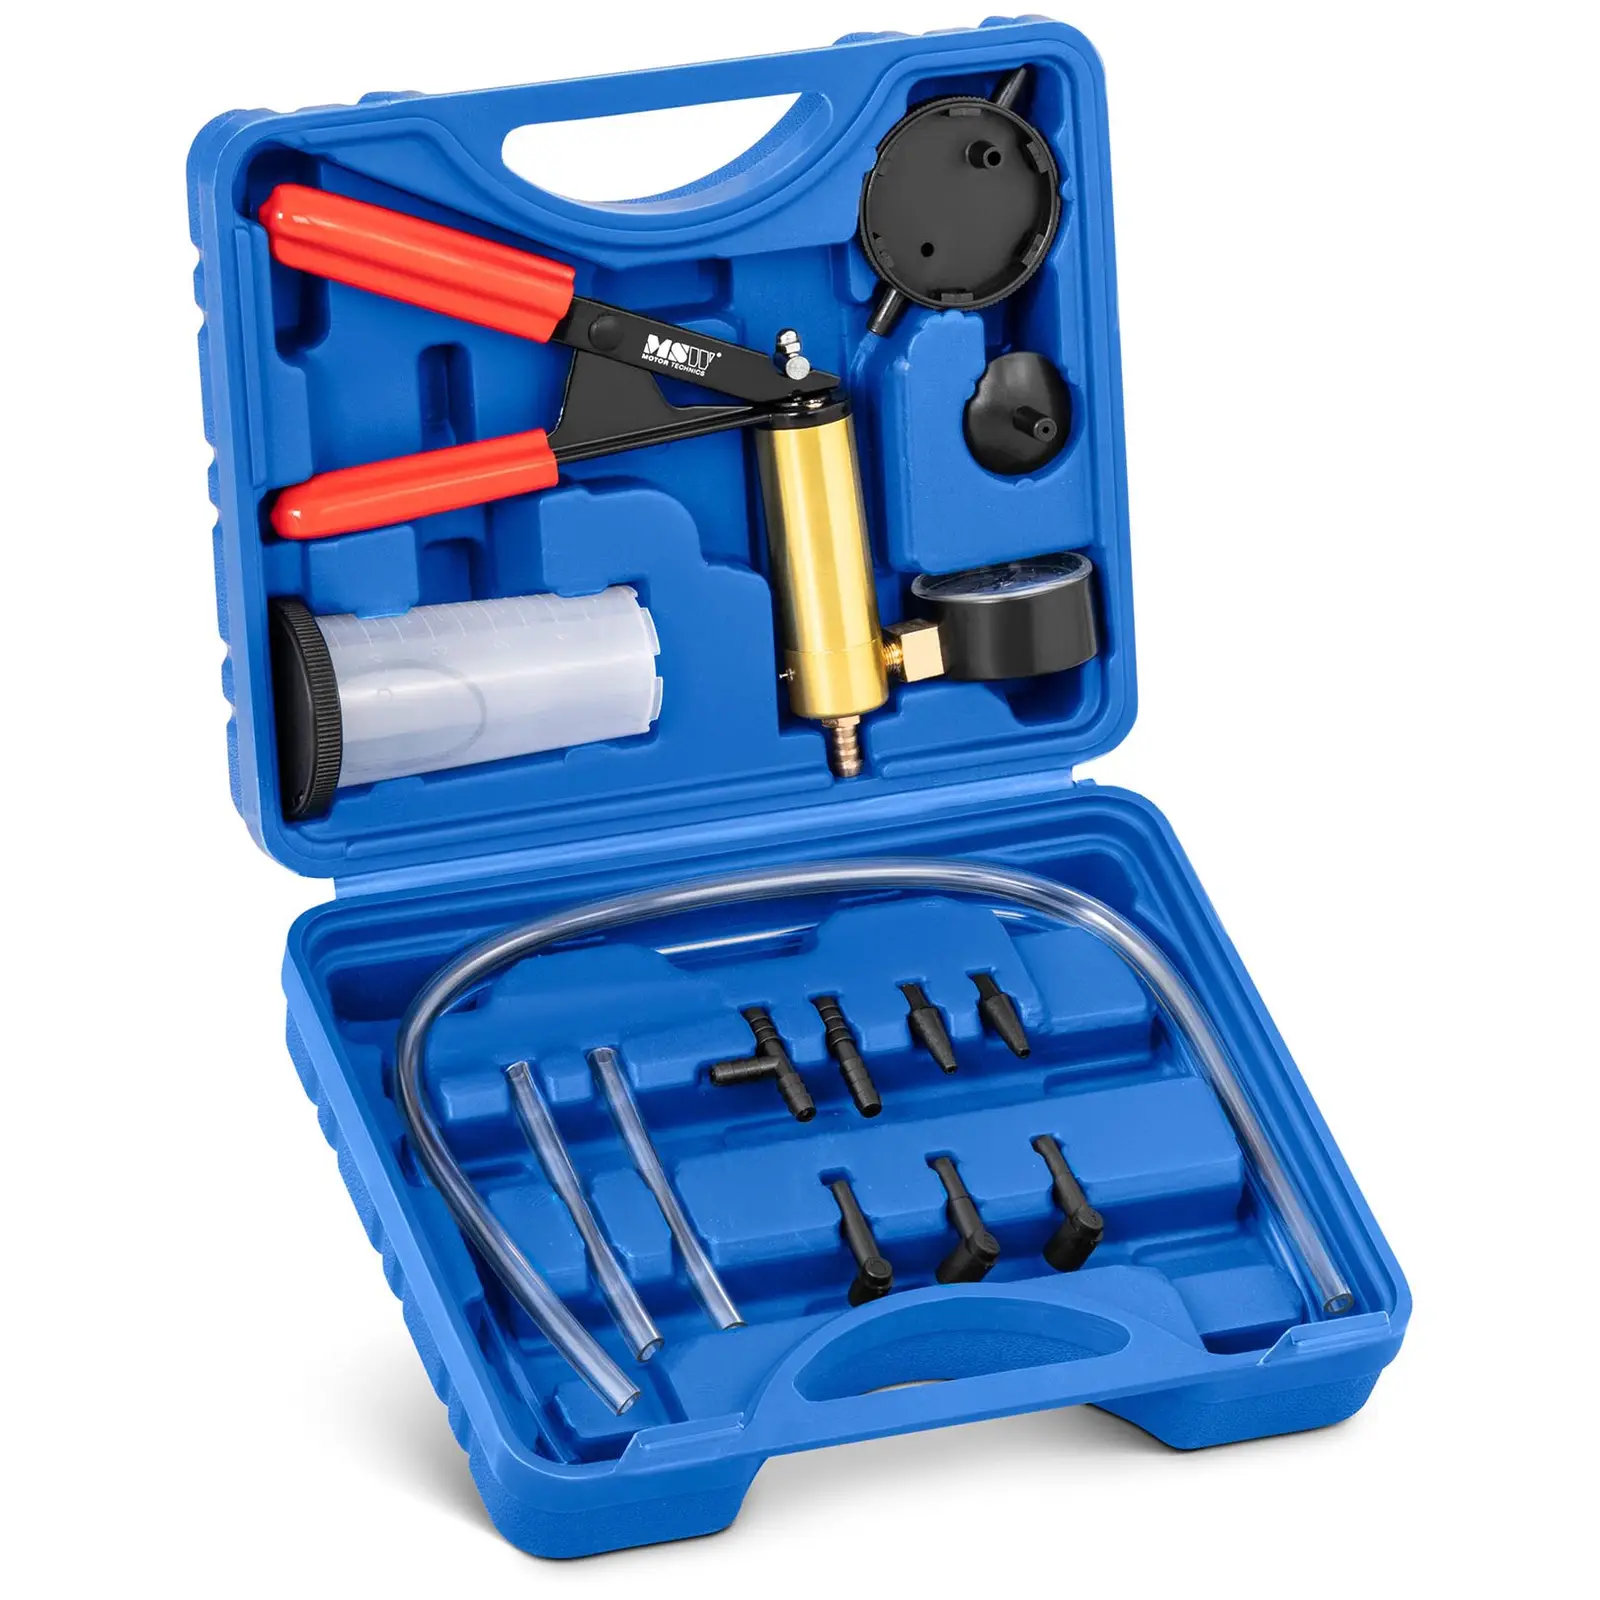 Kit Tester del vuoto e spurgo freni - 15 pezzi - Plastica (PVC, PP)/acciaio al carbonio